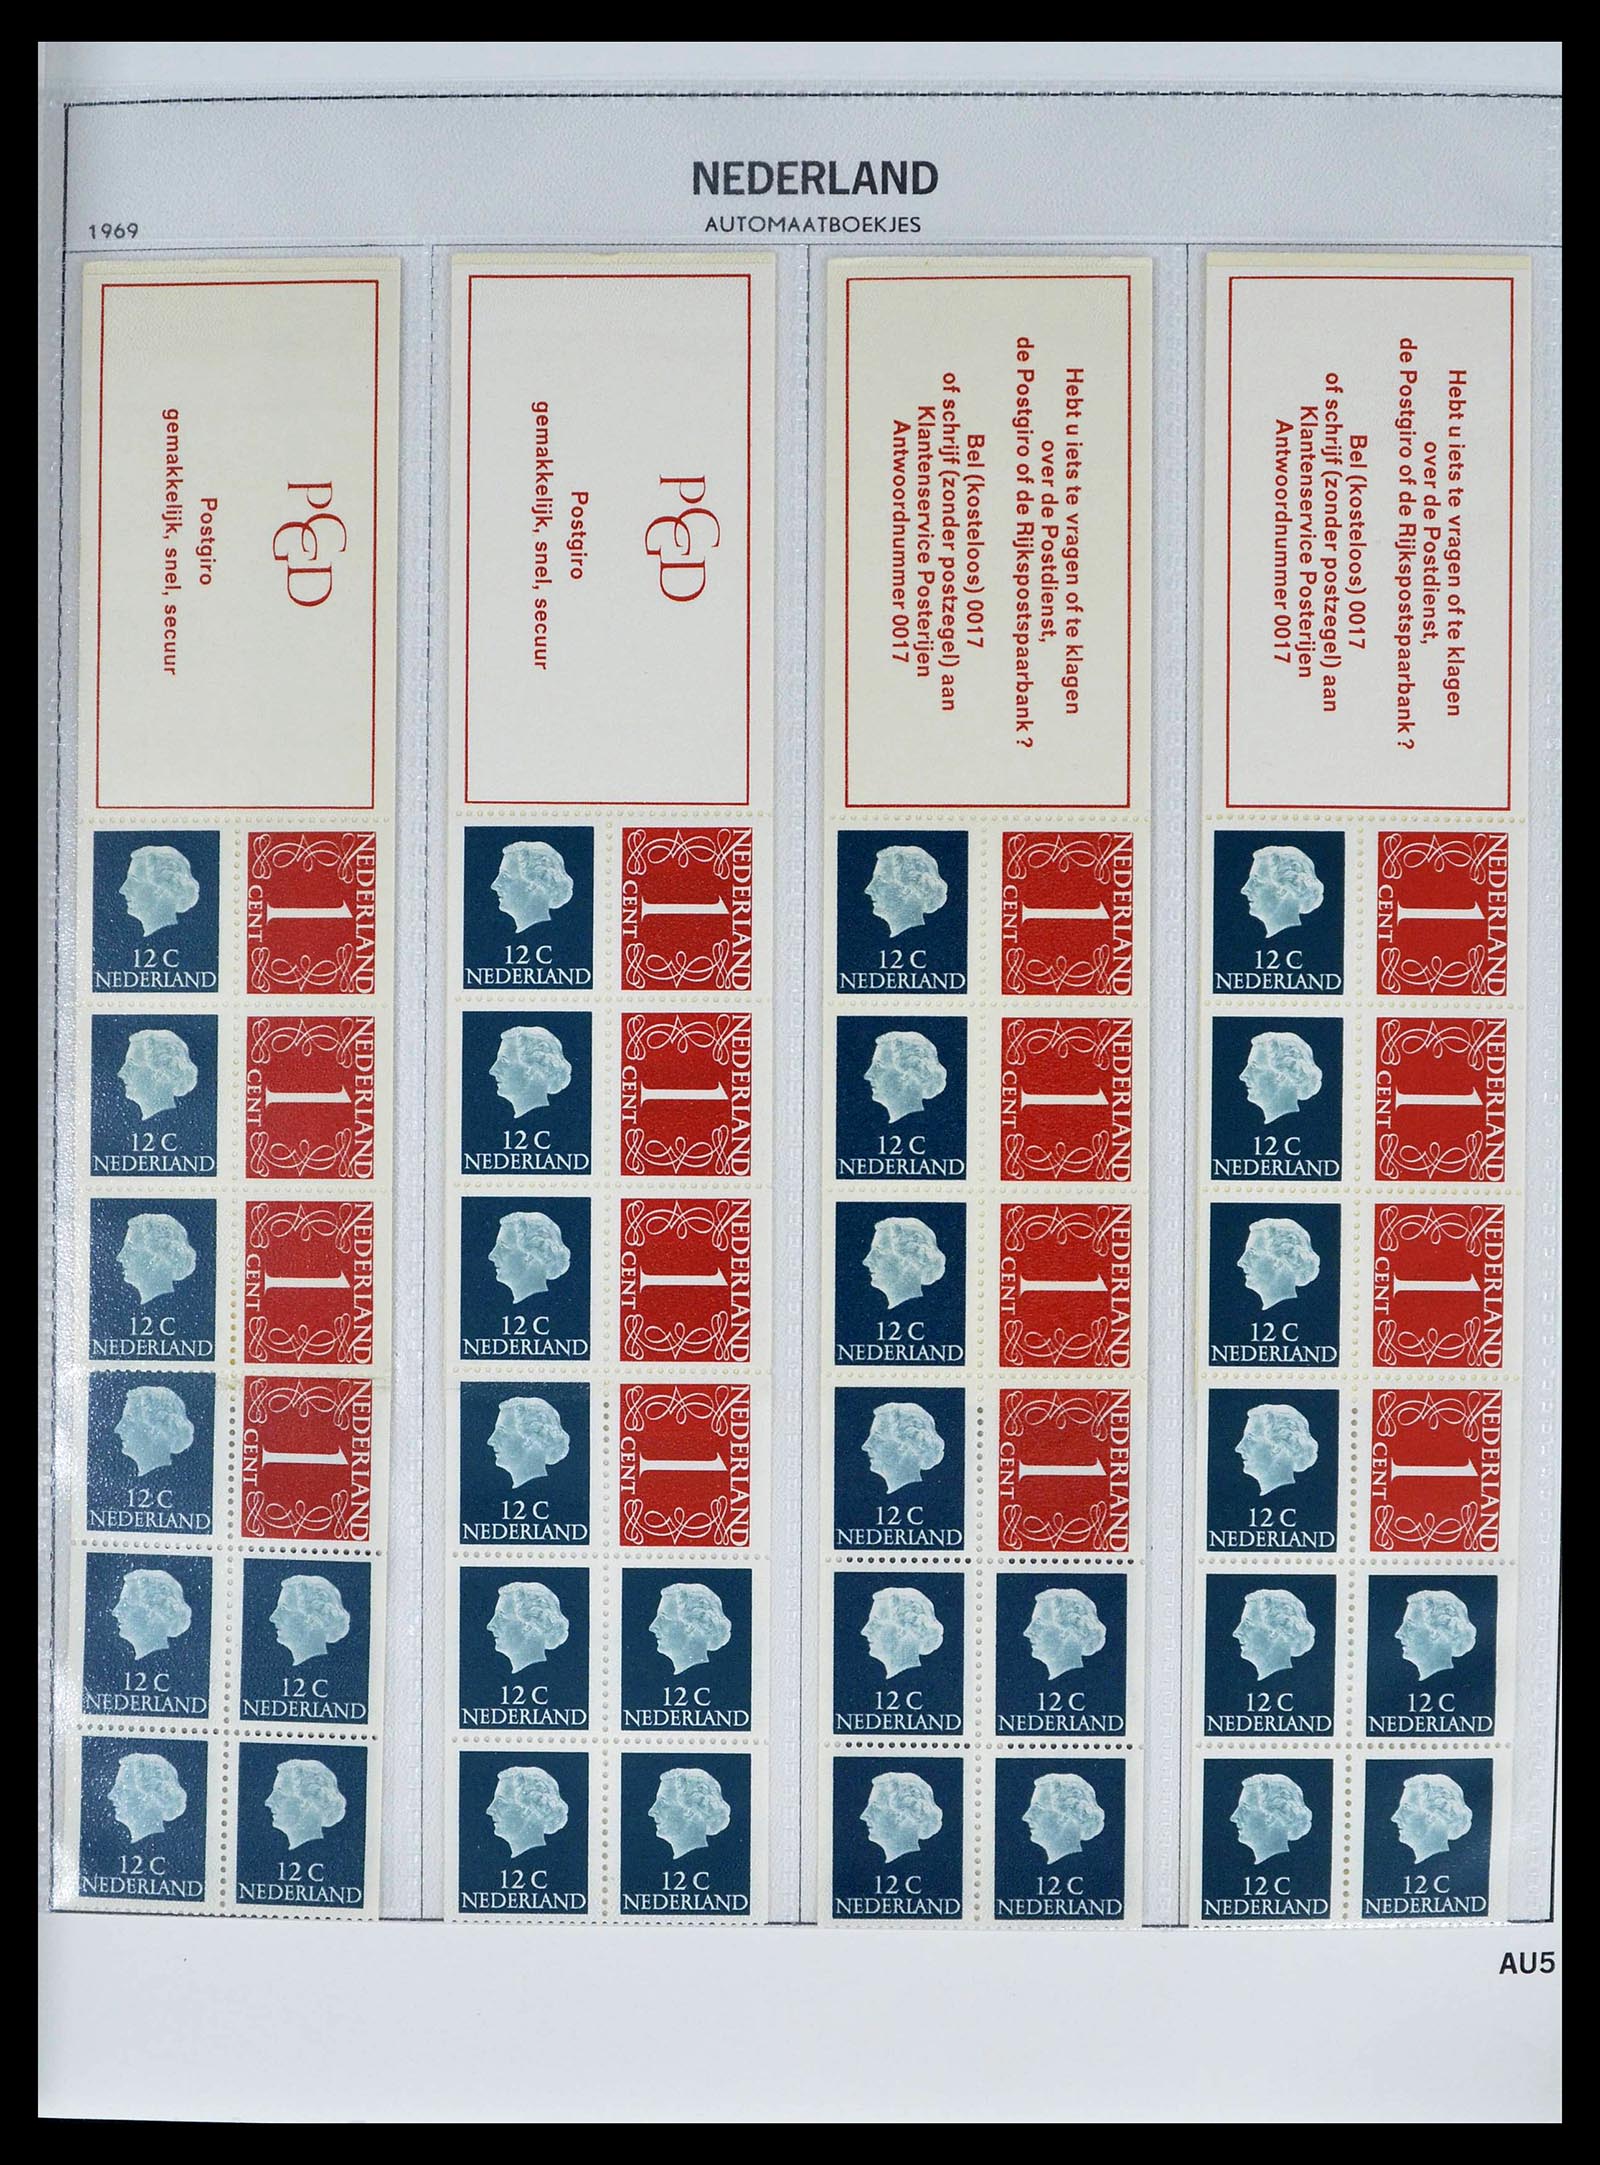 39362 0005 - Stamp collection 39362 Netherlands stamp booklets 1964-2003.